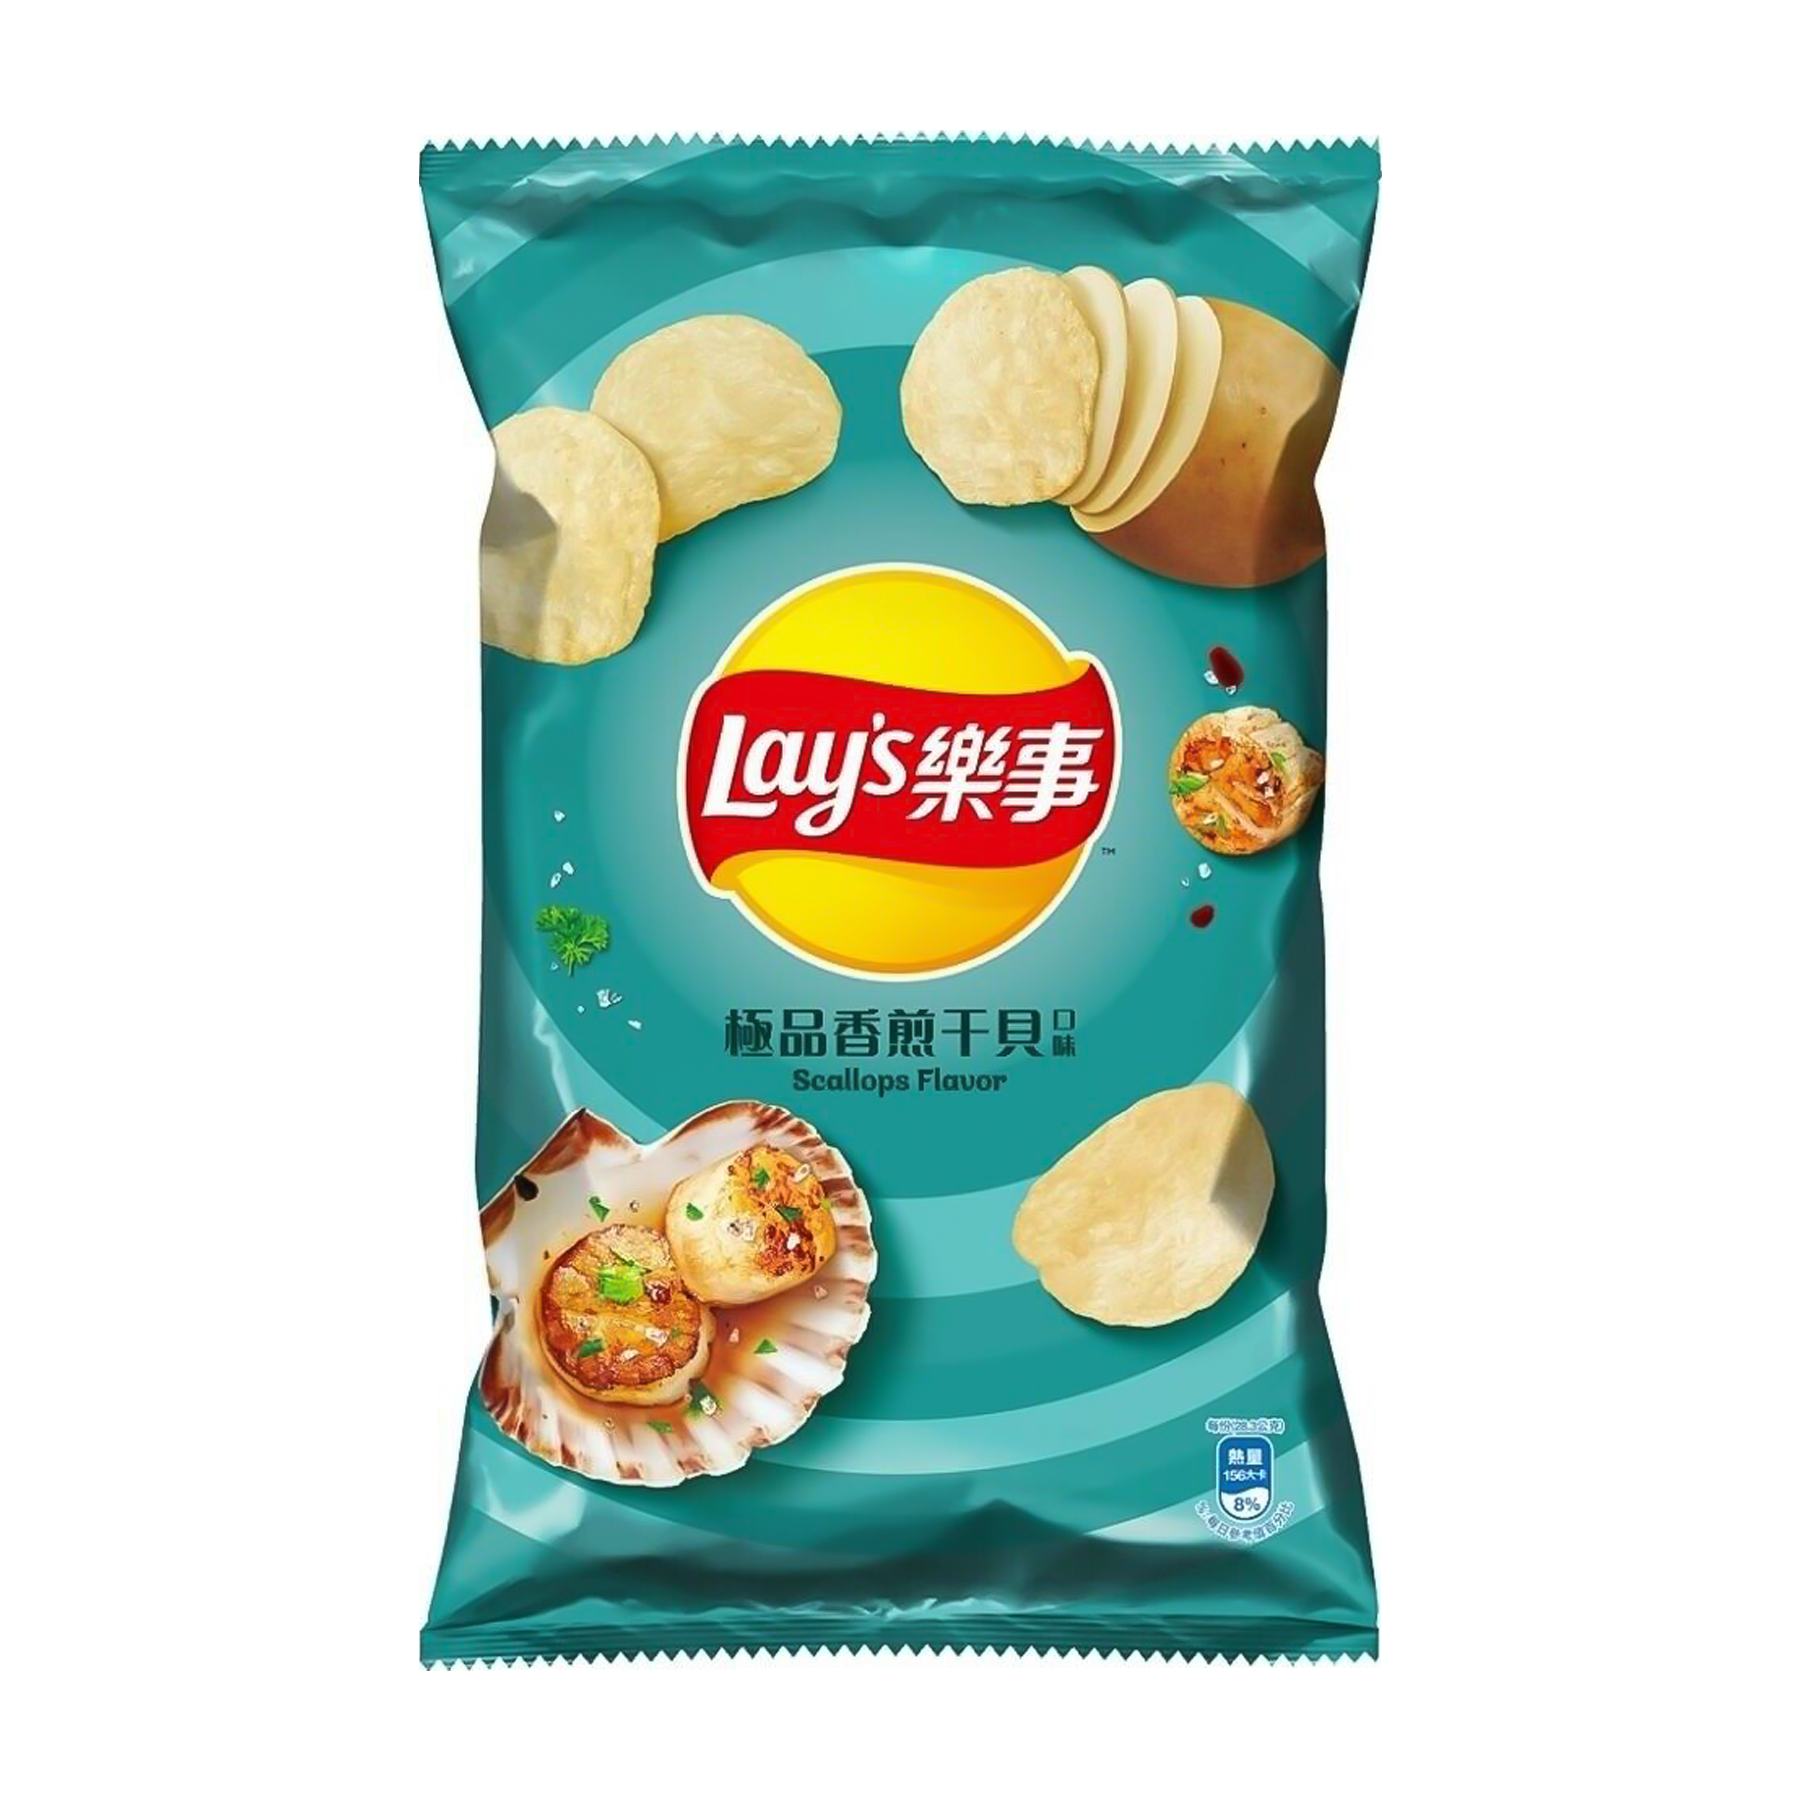 Lays Ribeye Steak Flavored Chips